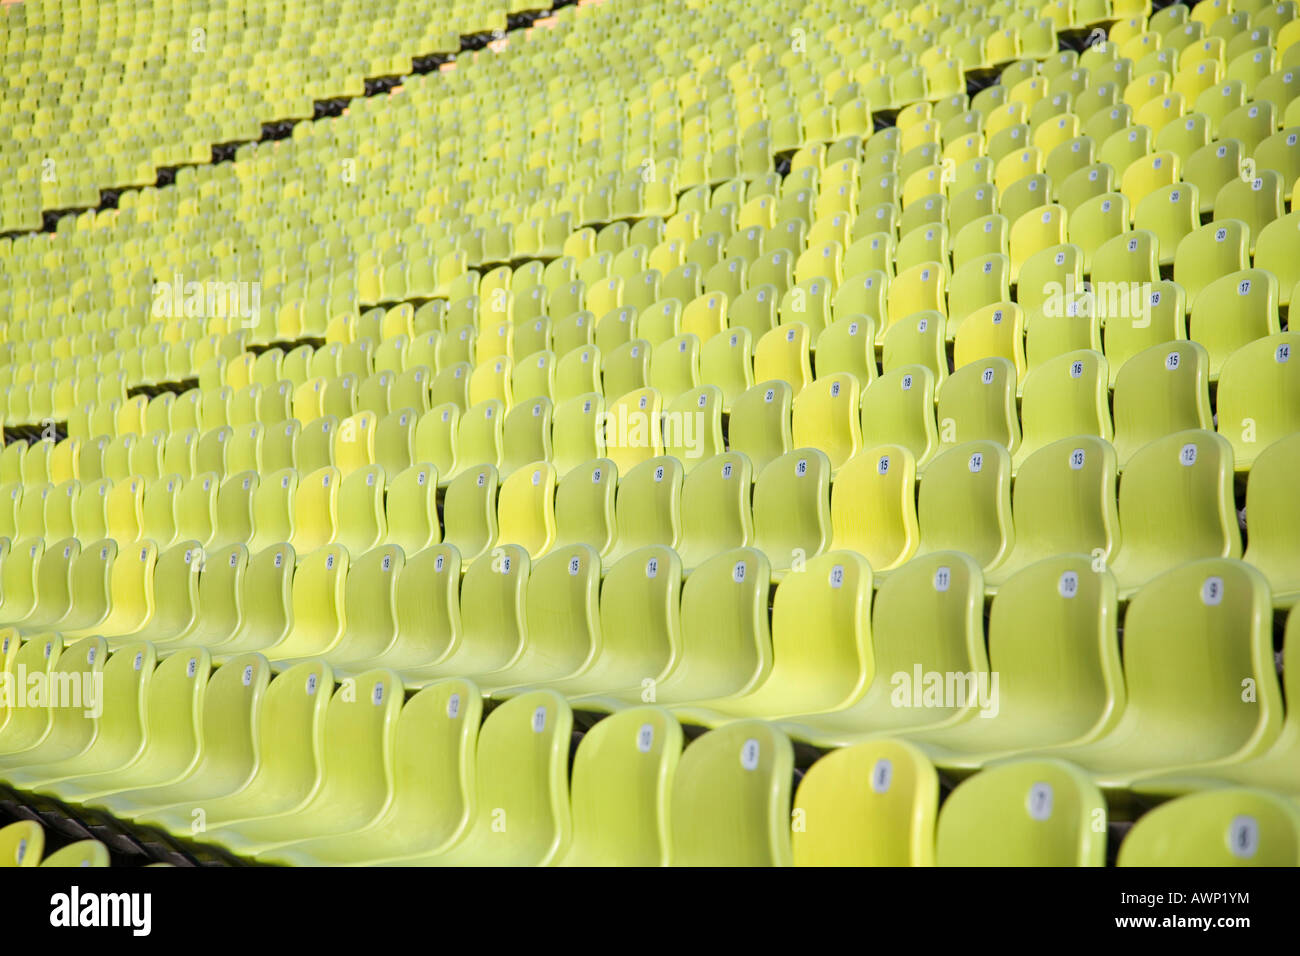 Green seats in a football stadium Stock Photo